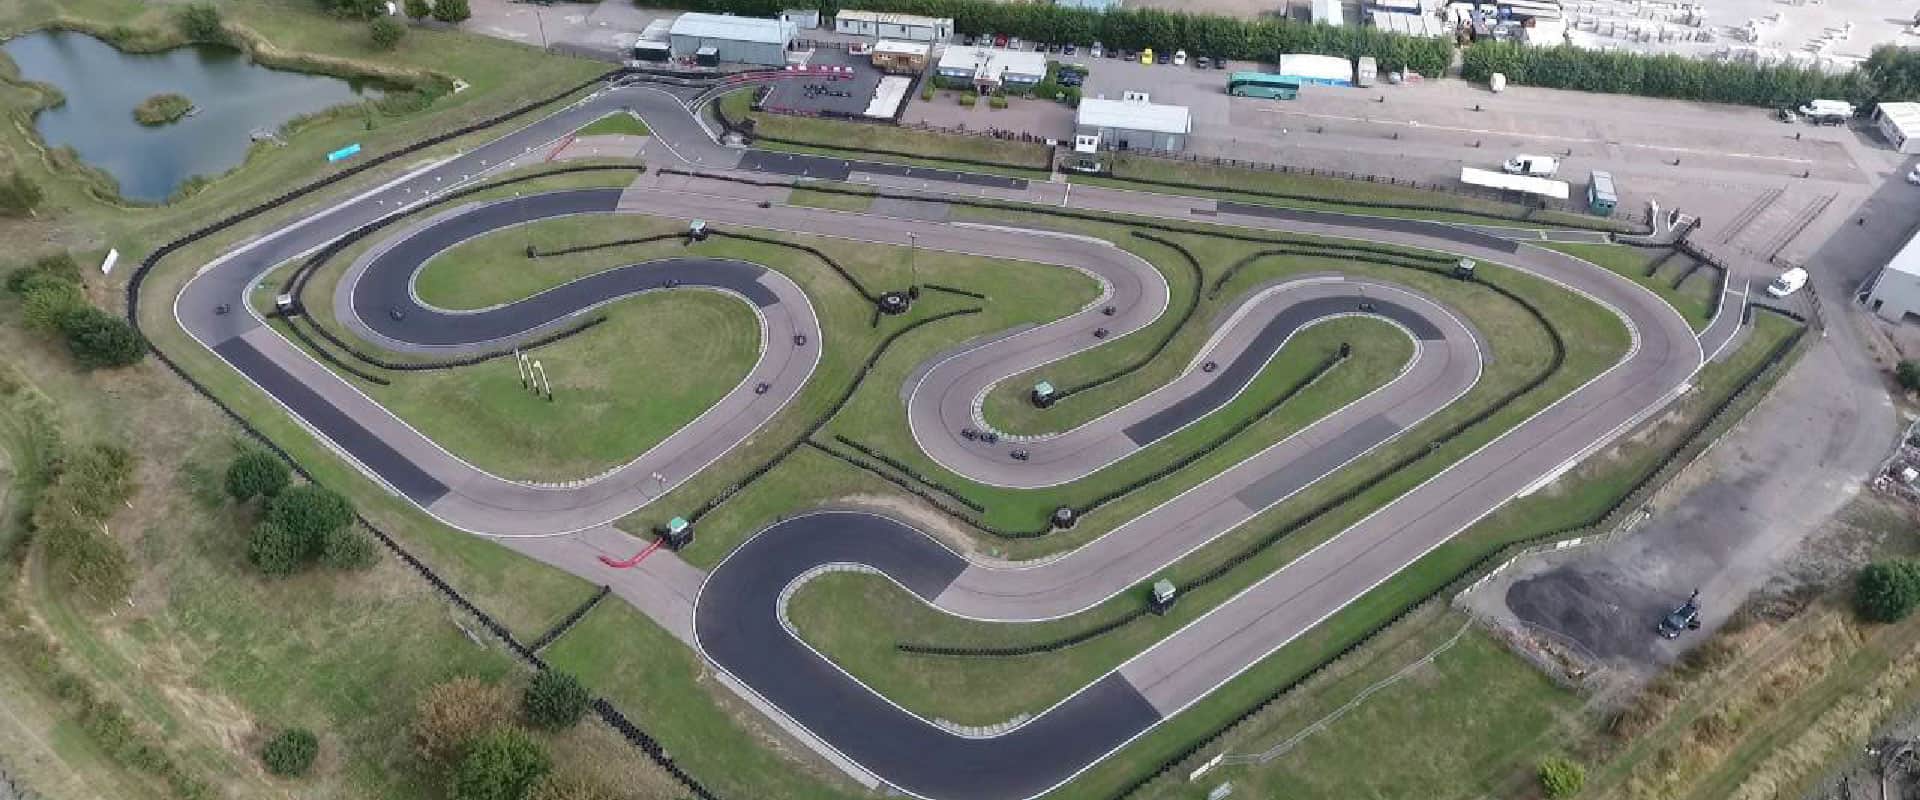 Bayford Meadows Kart Circuit Ltd in UK